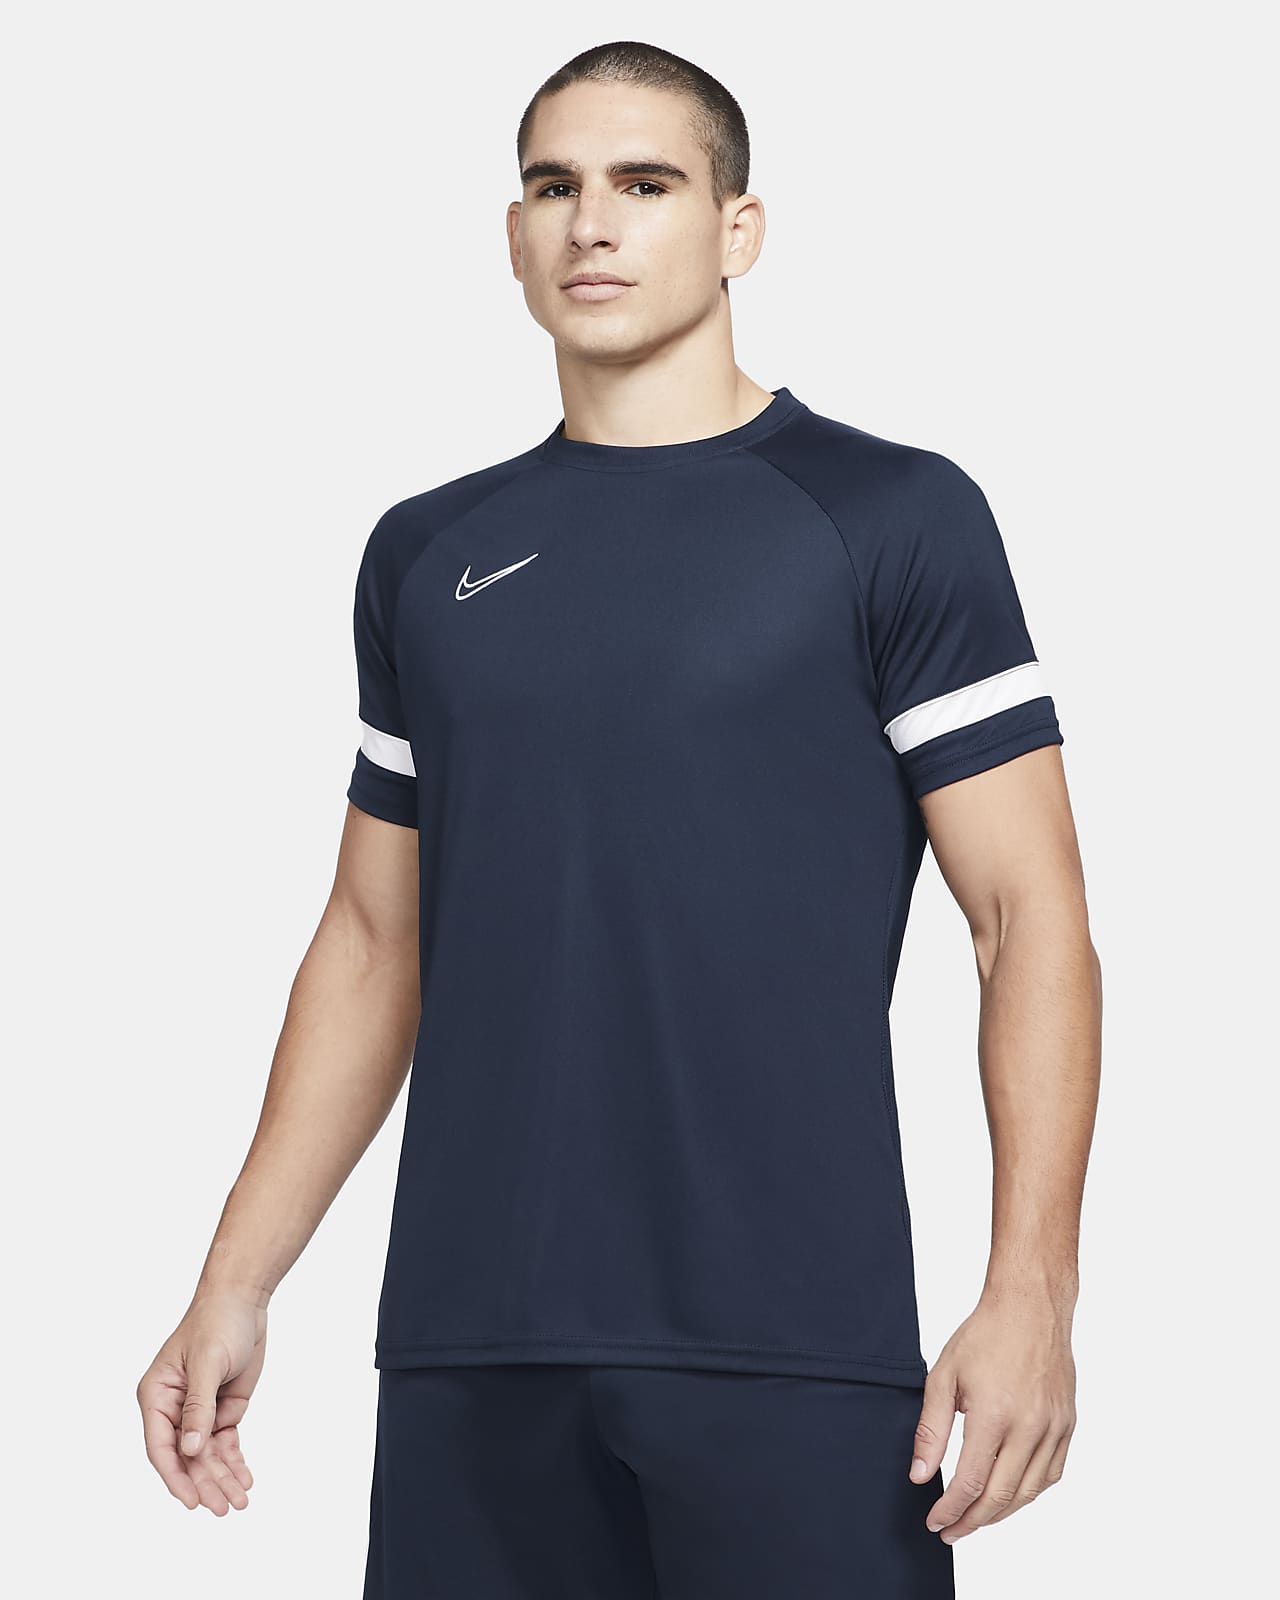 Nike Dri-FIT Academy Men's Short-Sleeve Football Top. Nike NL